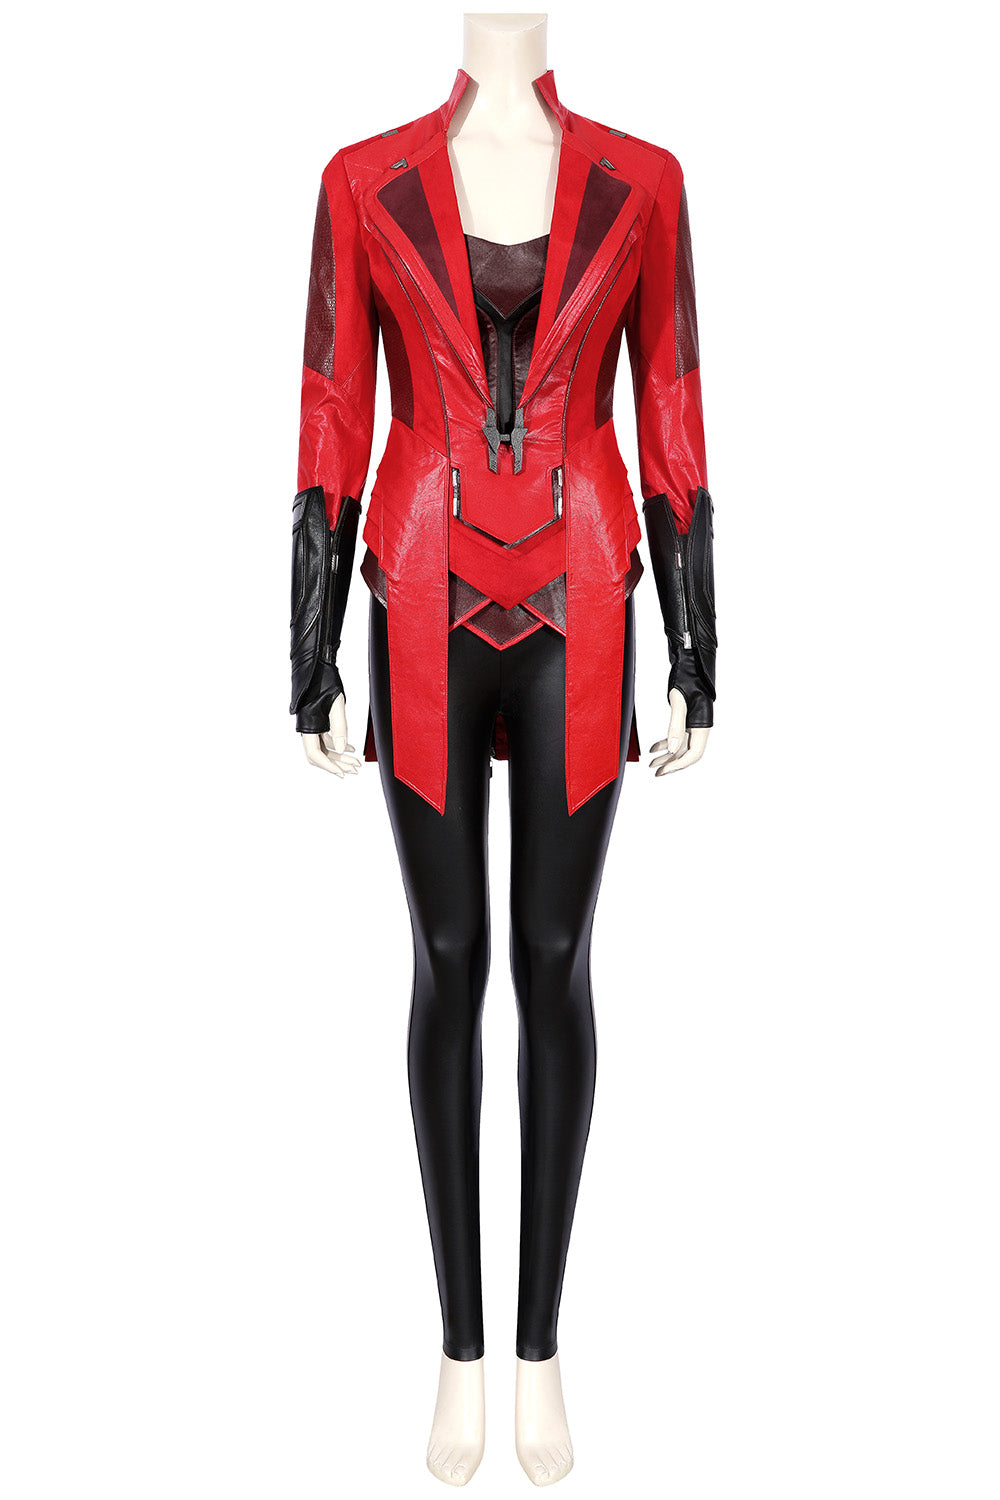 Marvel Captain America Civil War Scarlet Witch Wanda Cosplay Costume